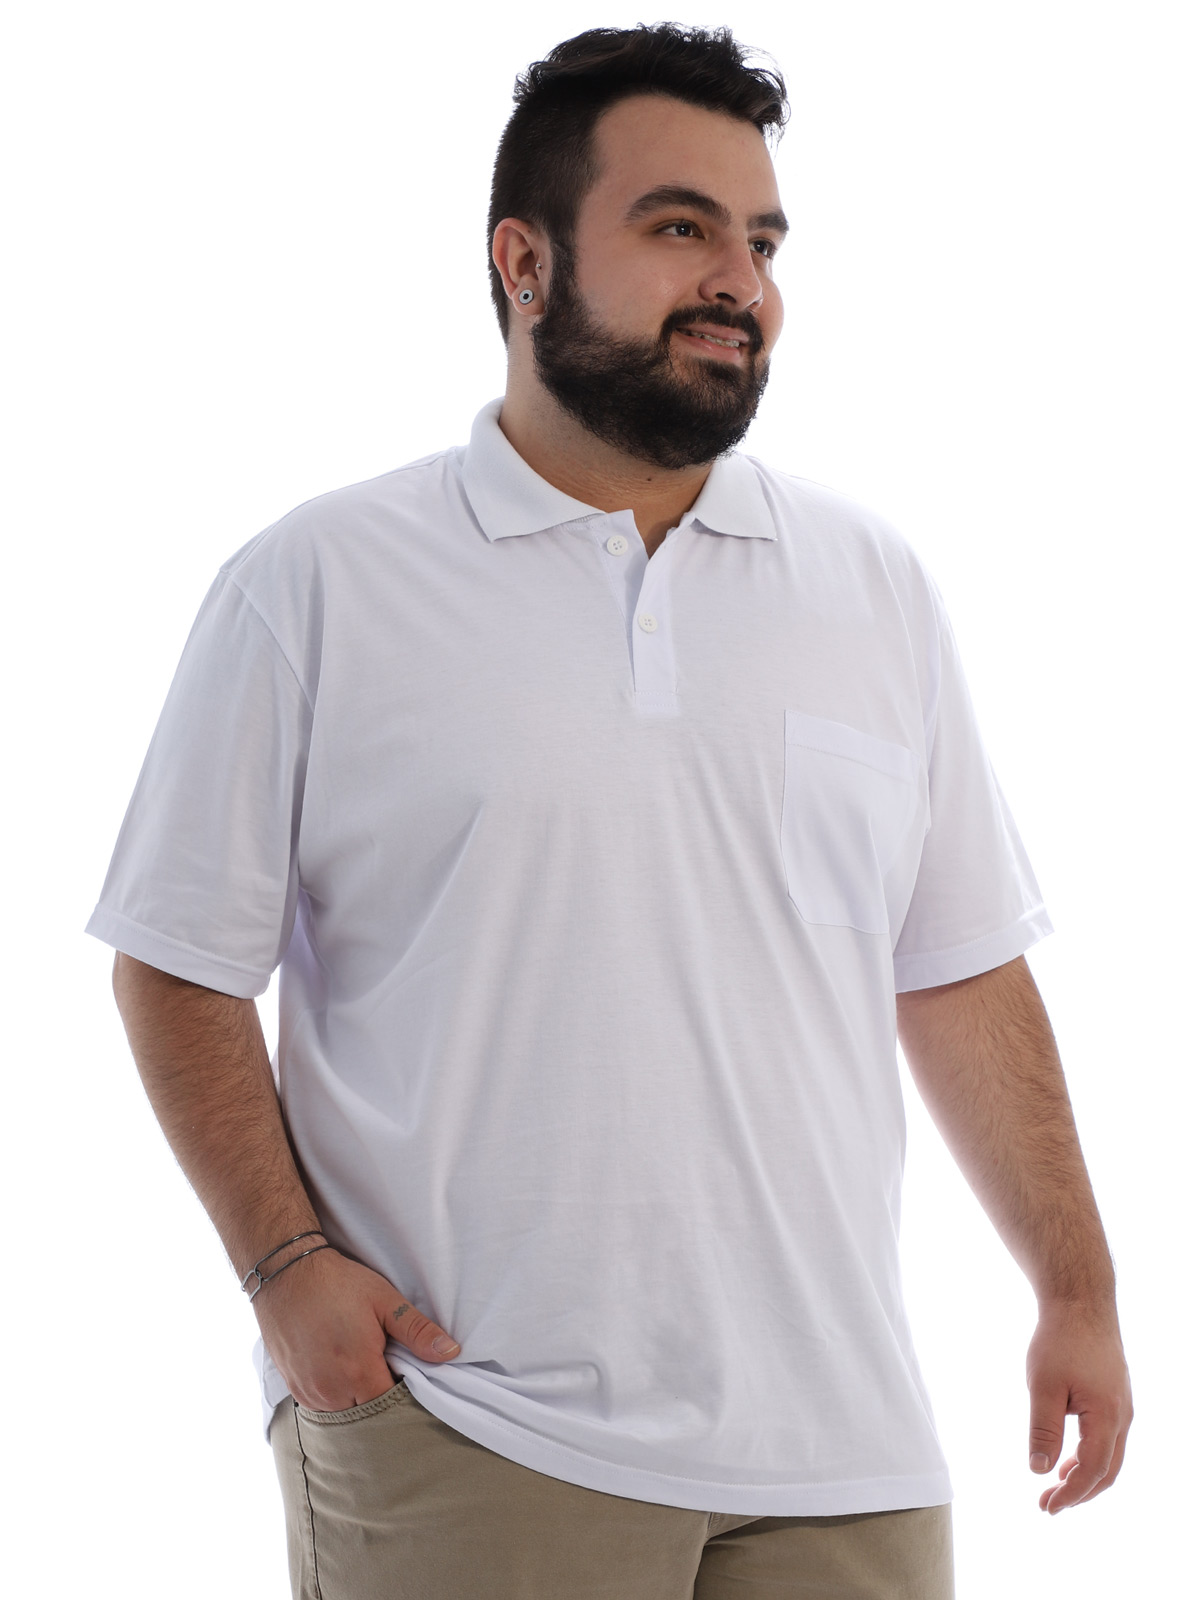 Camisa Polo Plus Size Masculina com Bolso Basica Branca